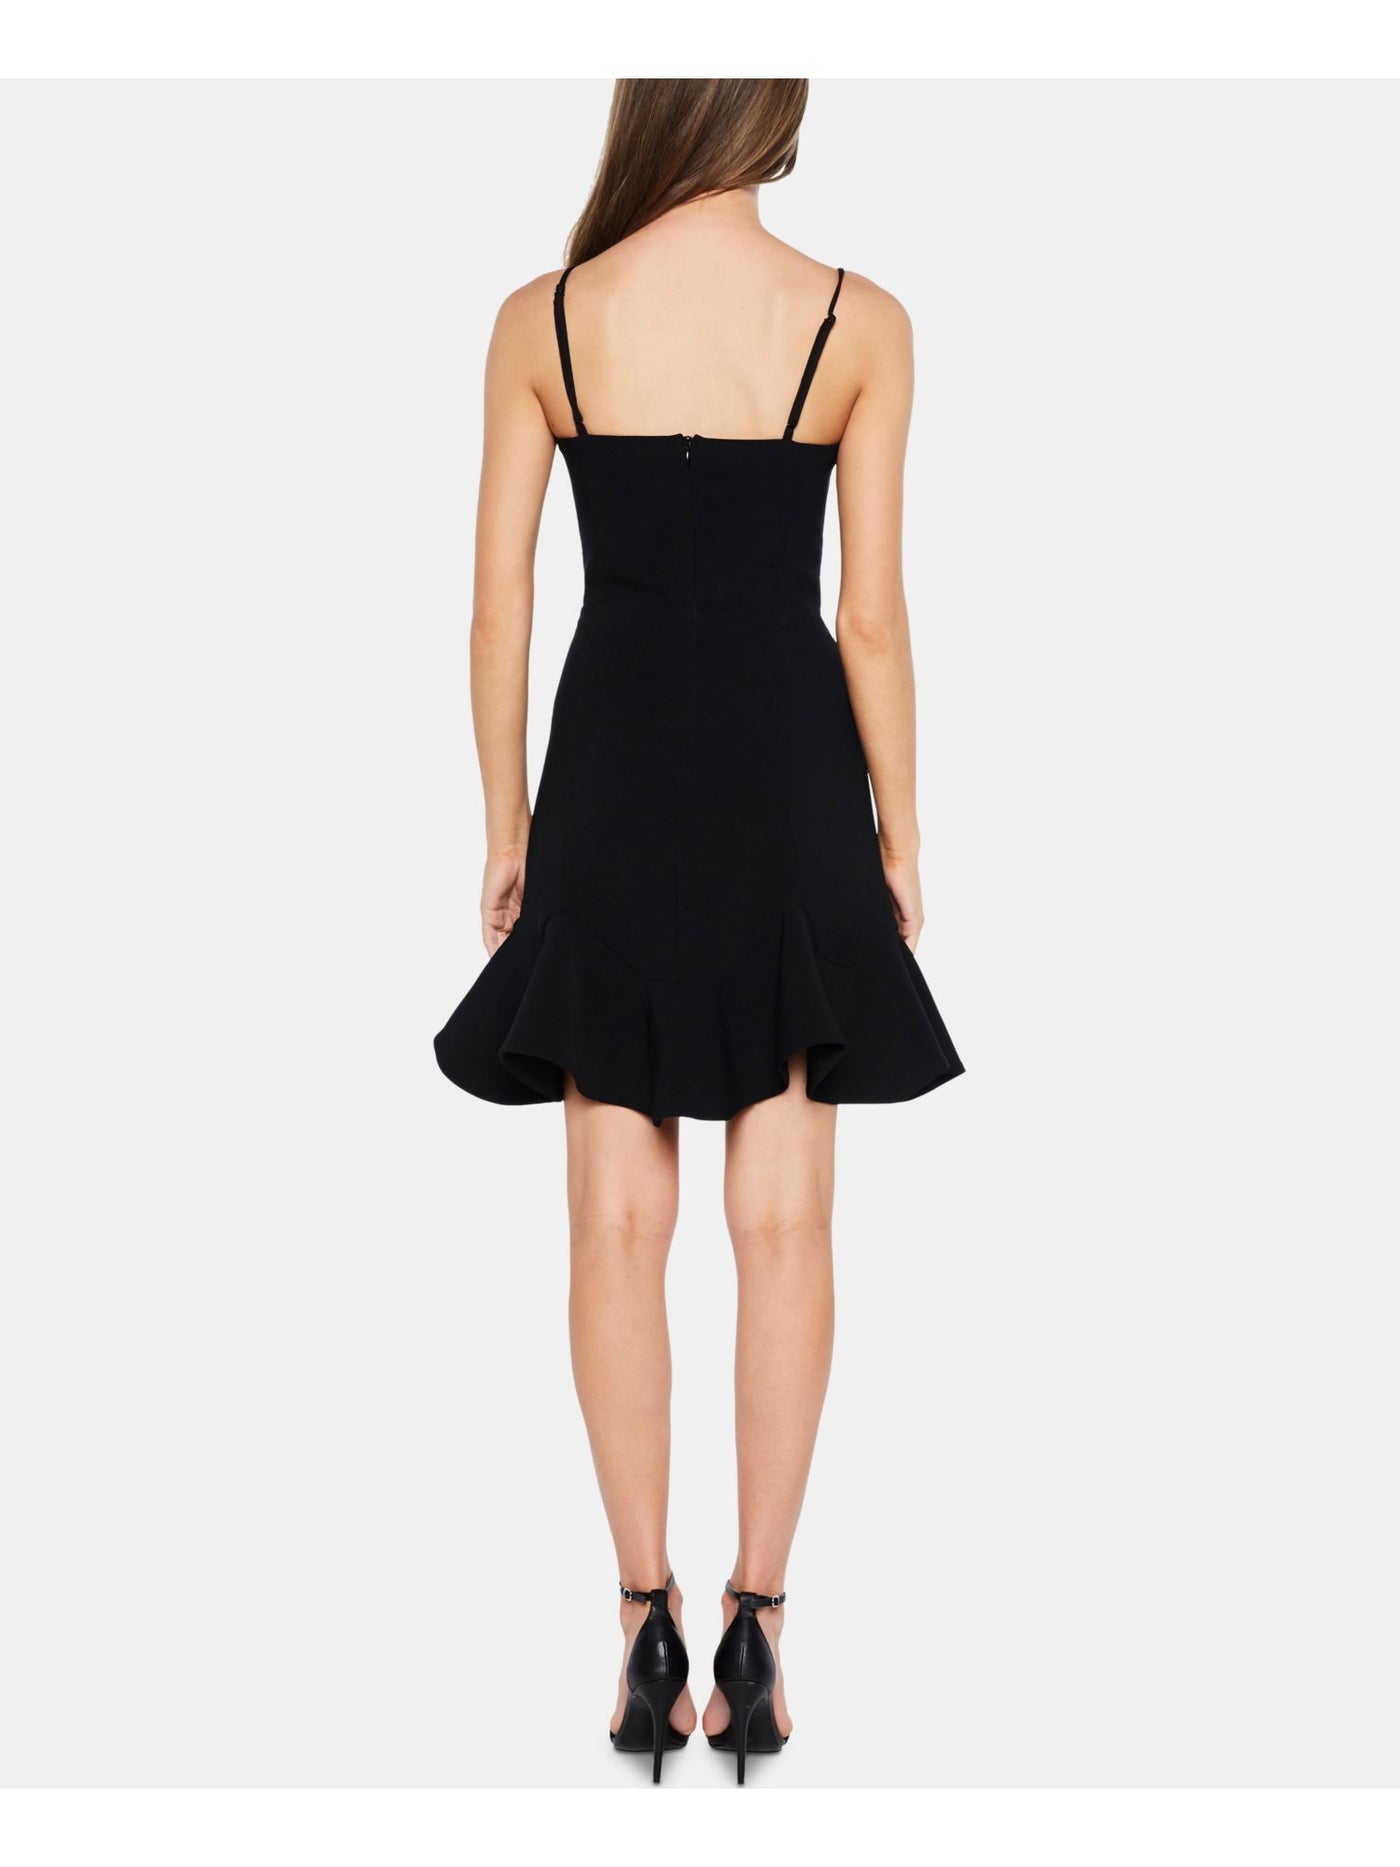 BARDOT Womens Black Spaghetti Strap Square Neck Above The Knee Party Fit + Flare Dress XS